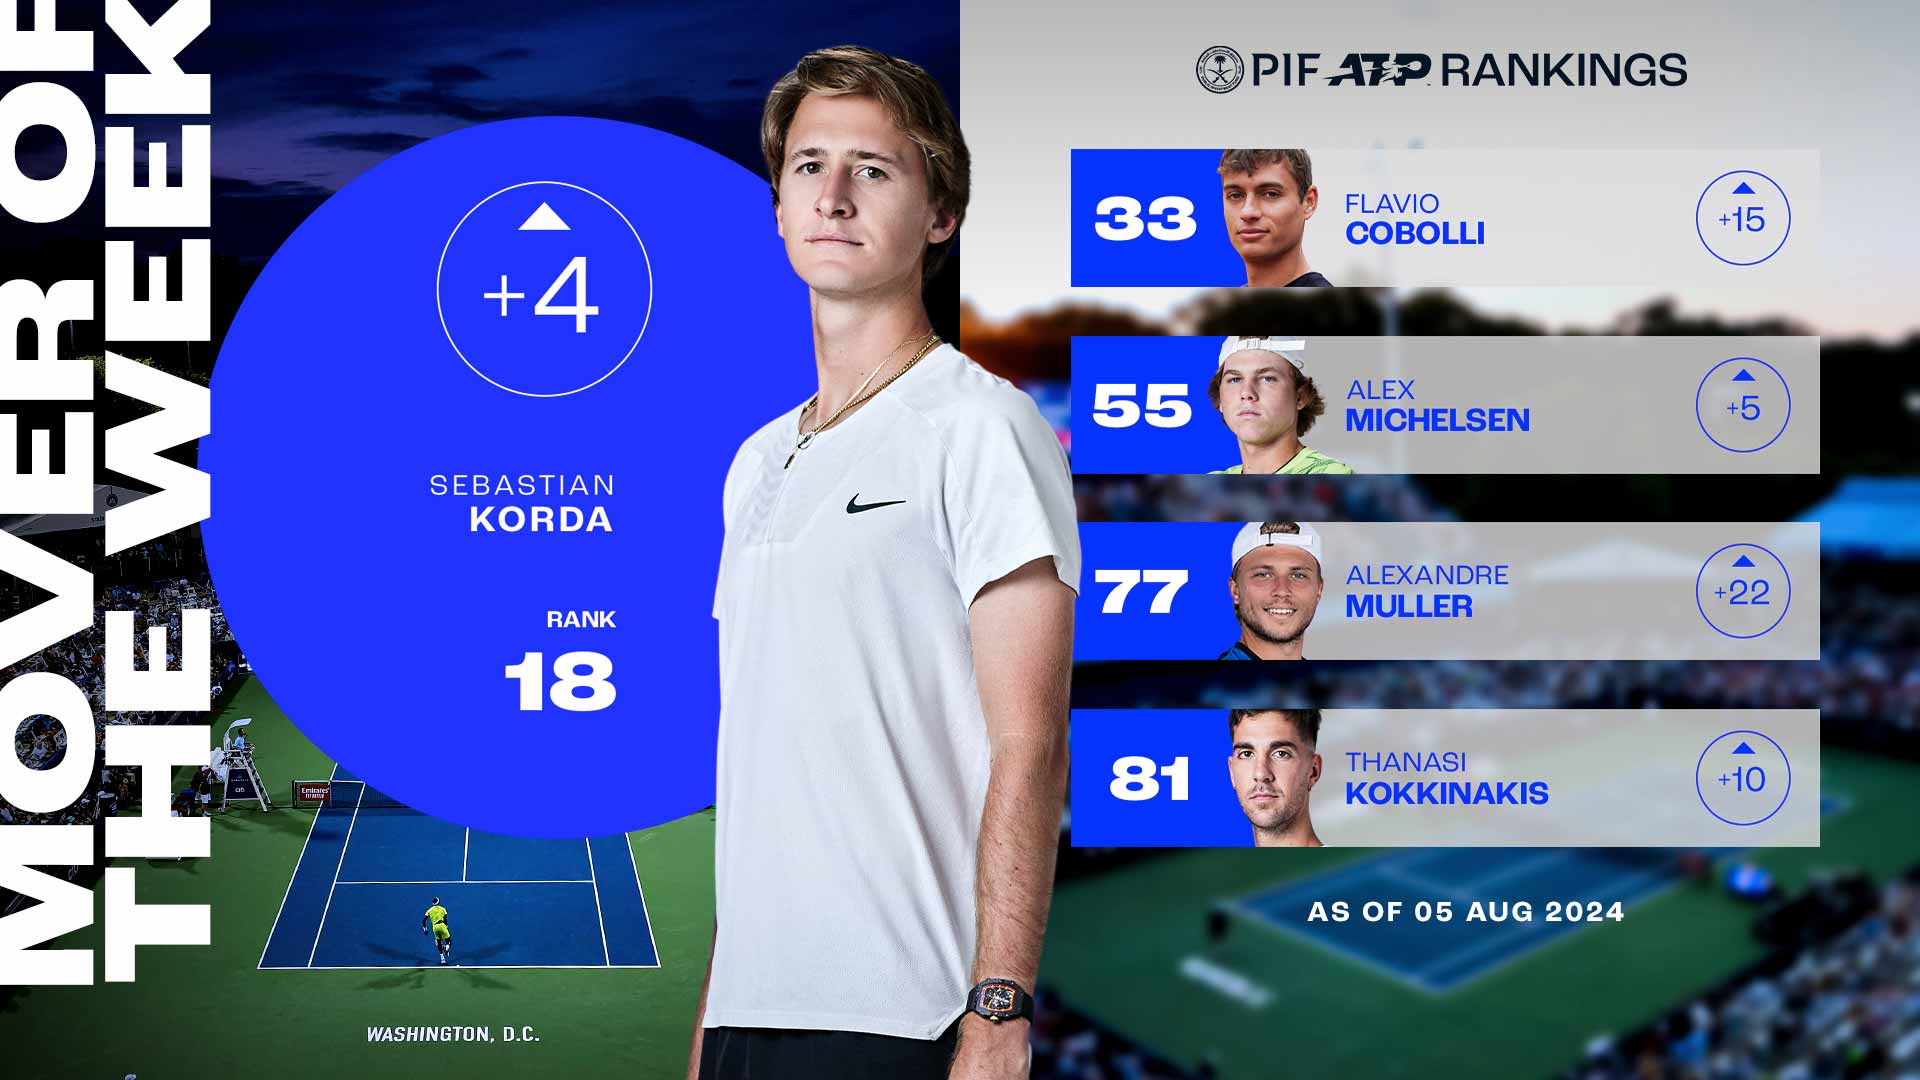 Sebastian Korda climbs to No. 18 in the PIF ATP Rankings.